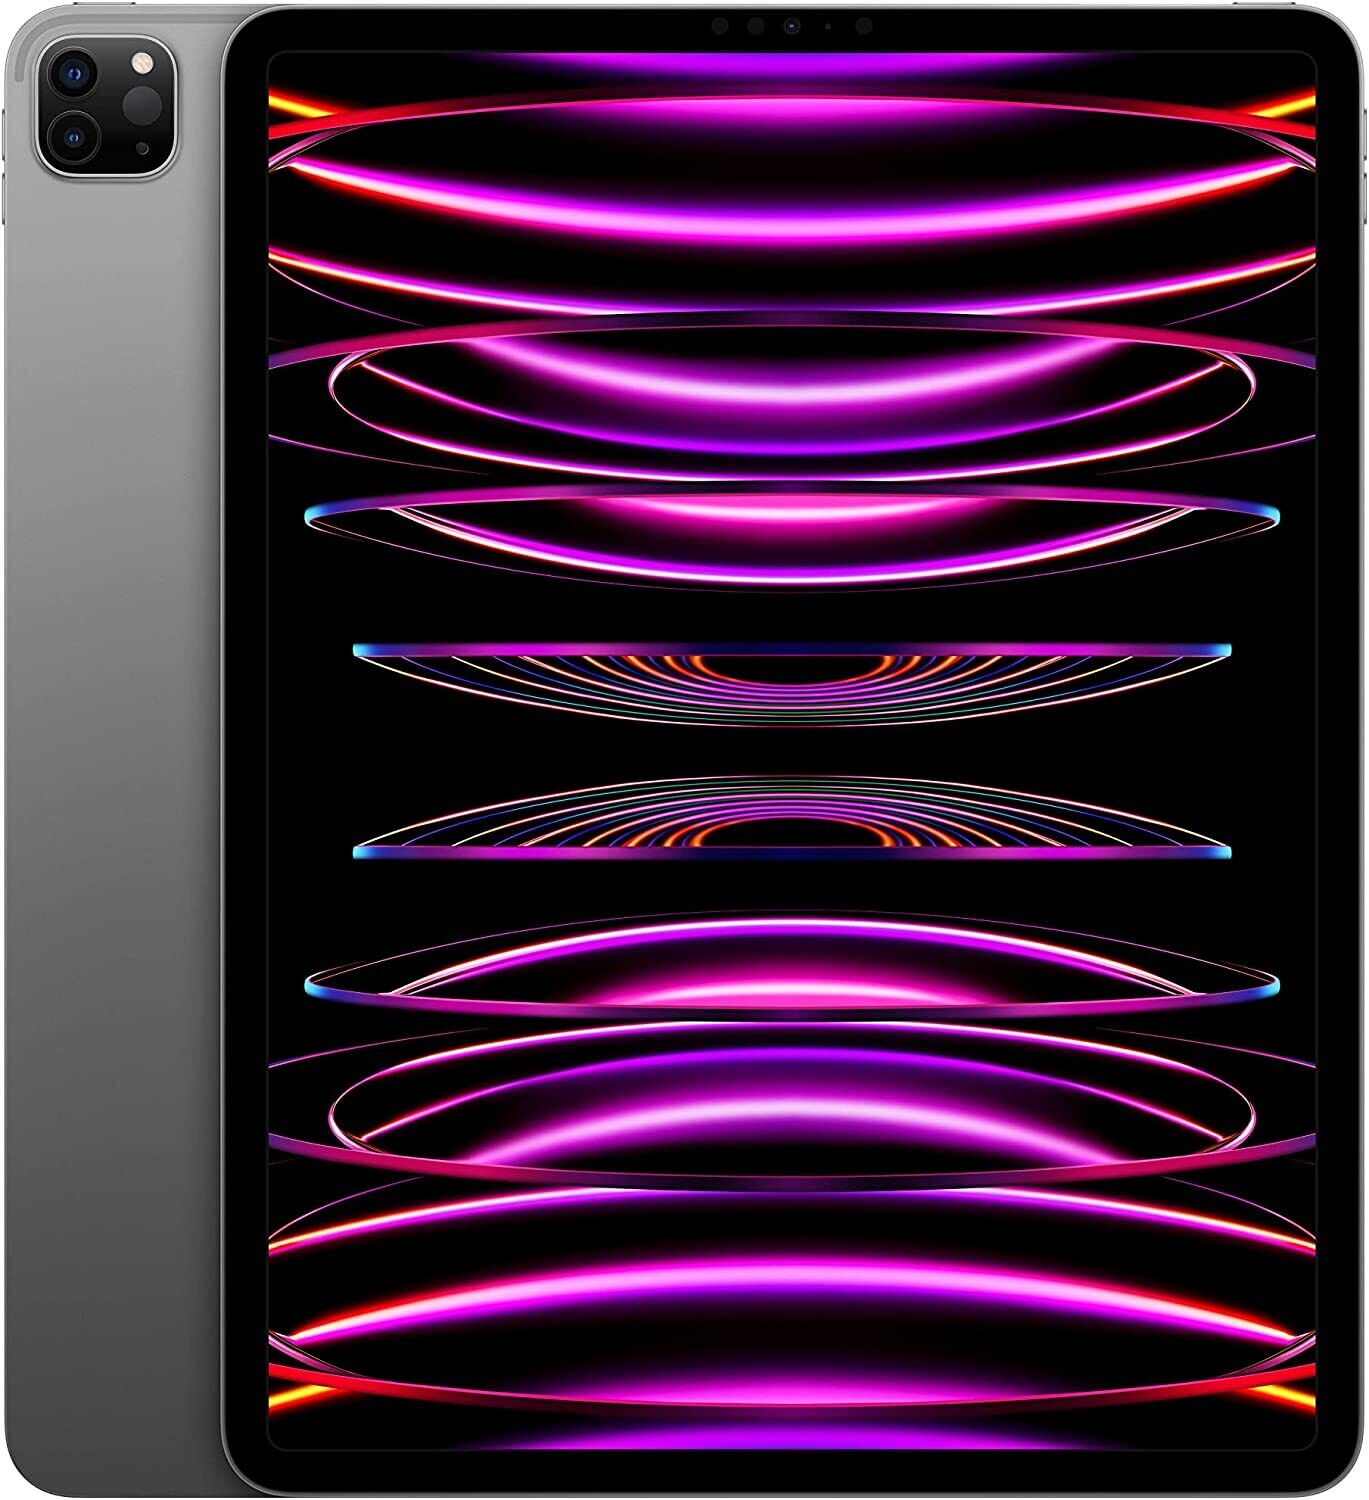 2022 Apple 11-inch iPad Pro (Wi-Fi, 256GB) - Space Gray (4th Generation)